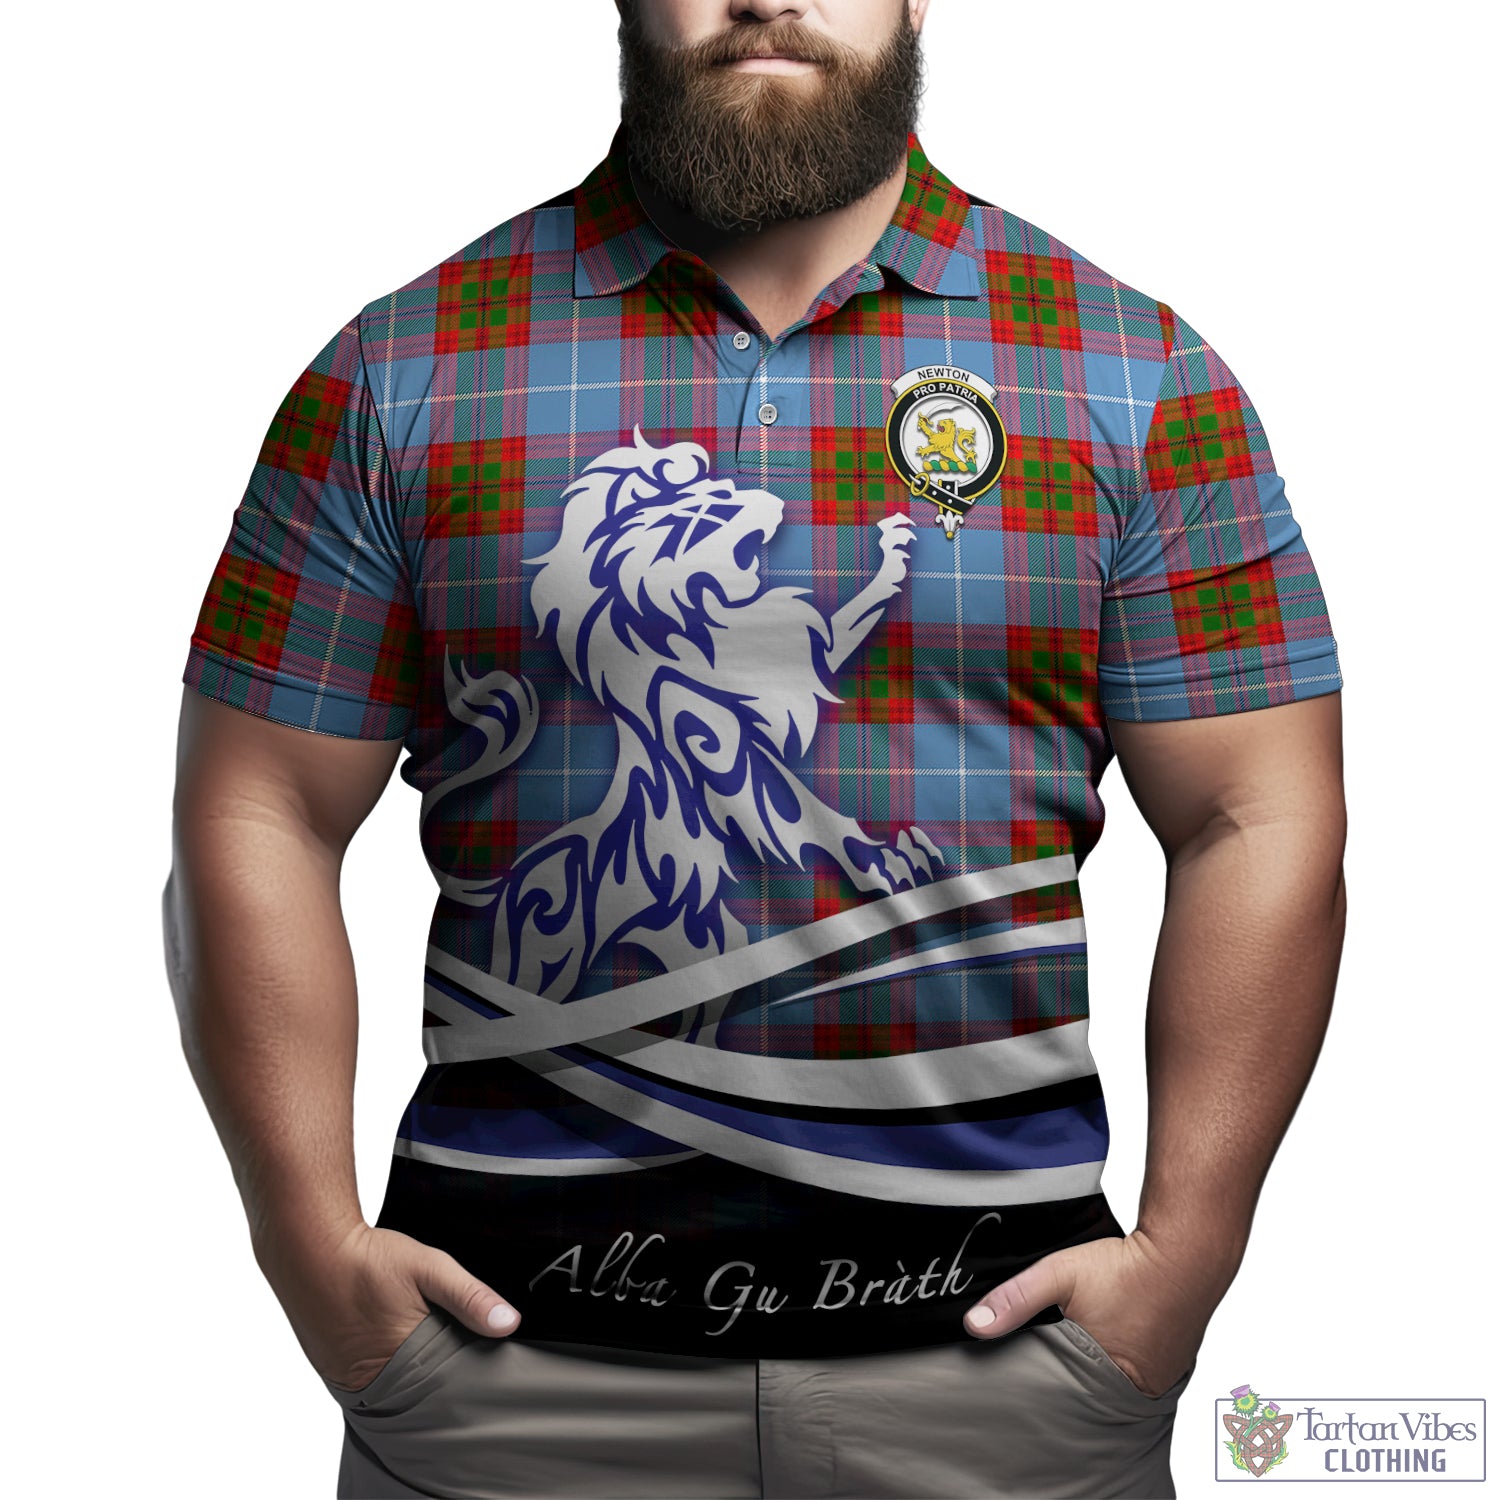 newton-tartan-polo-shirt-with-alba-gu-brath-regal-lion-emblem